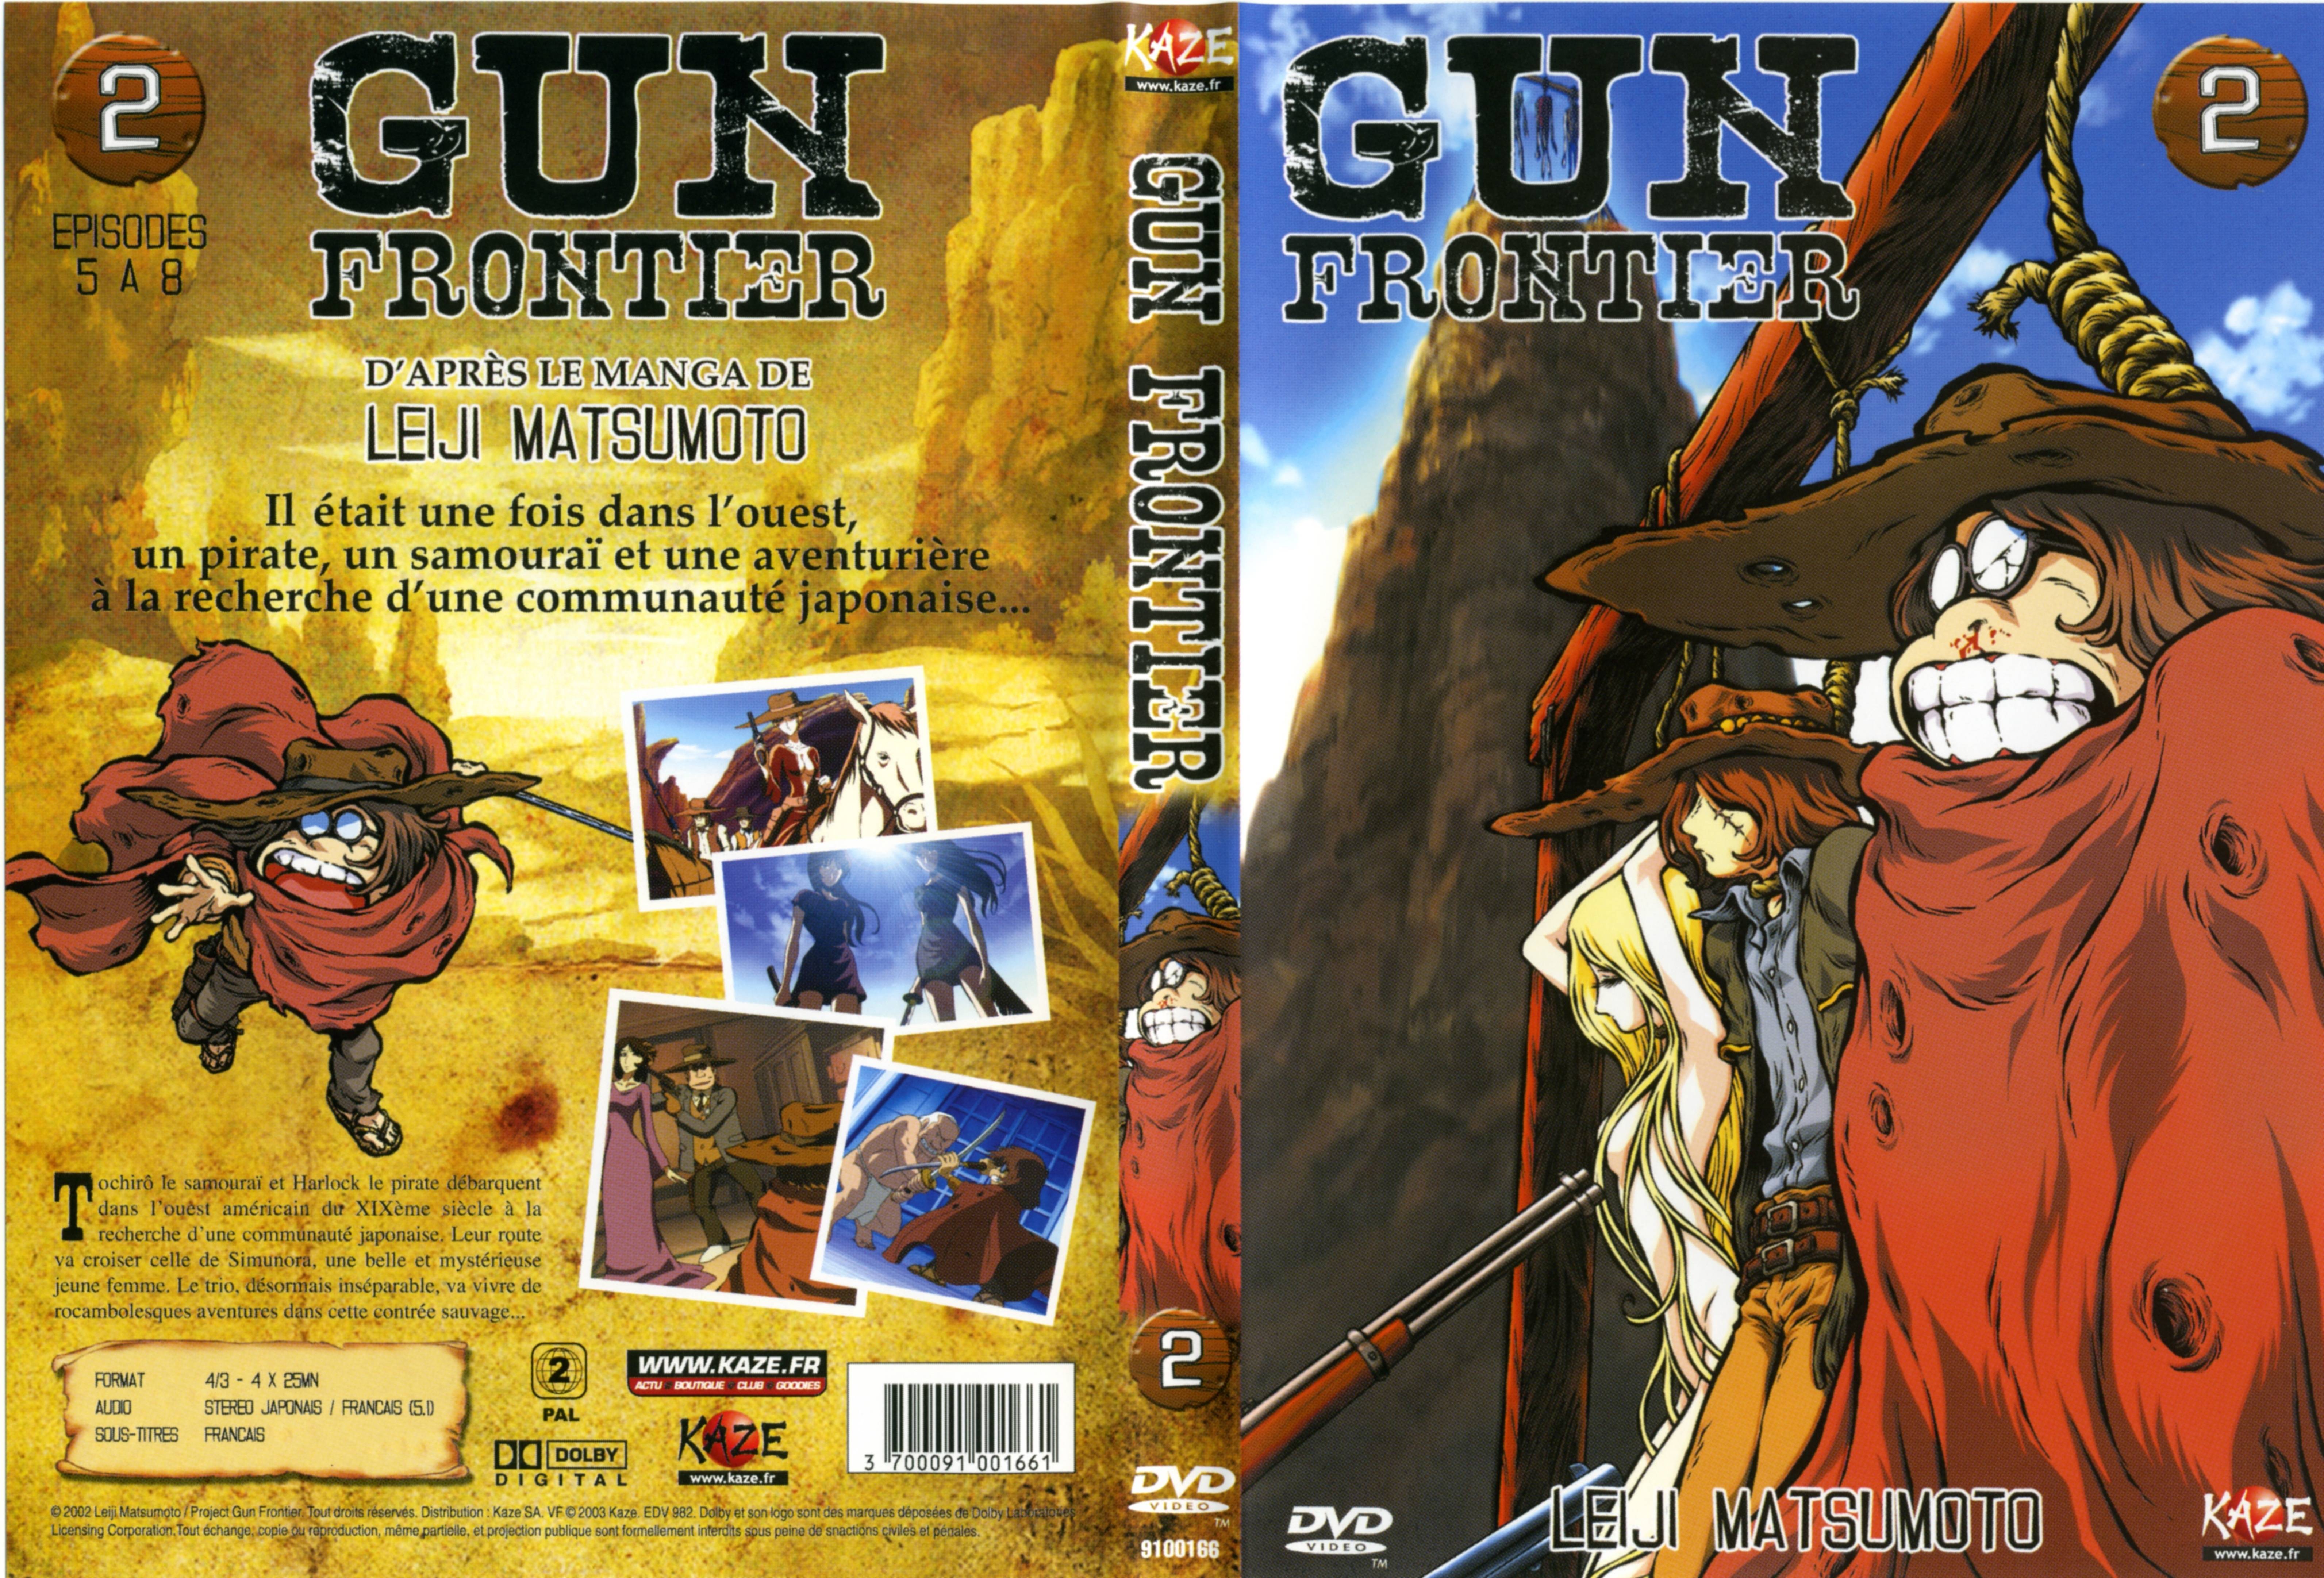 Jaquette DVD Gun frontier vol 2